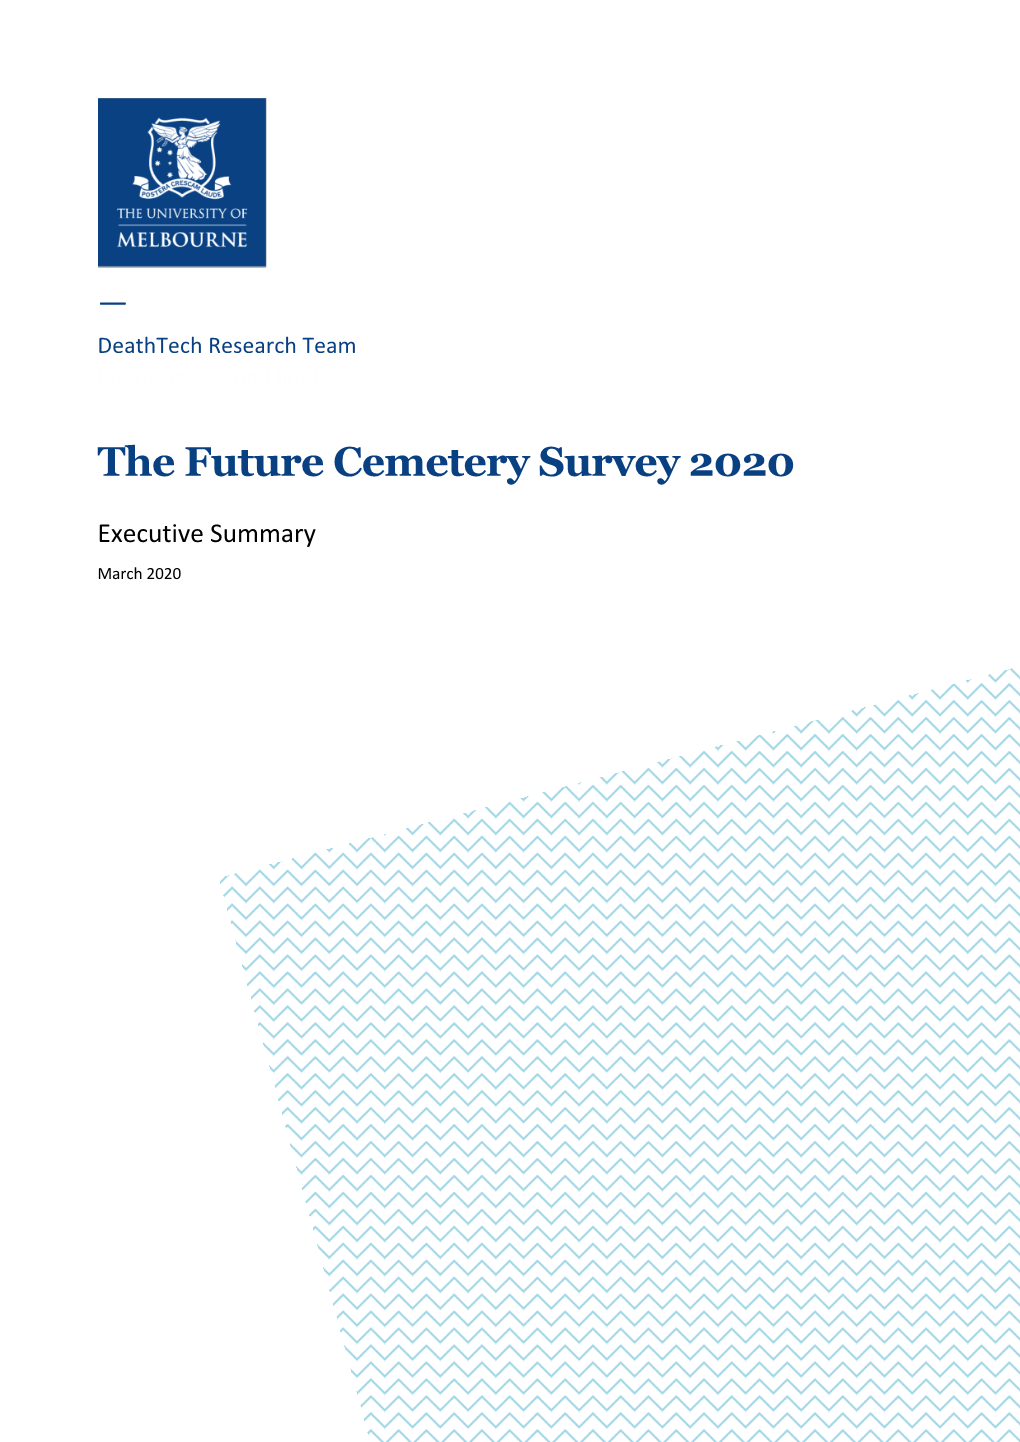 Future Cemetery Survey 2020 Summary